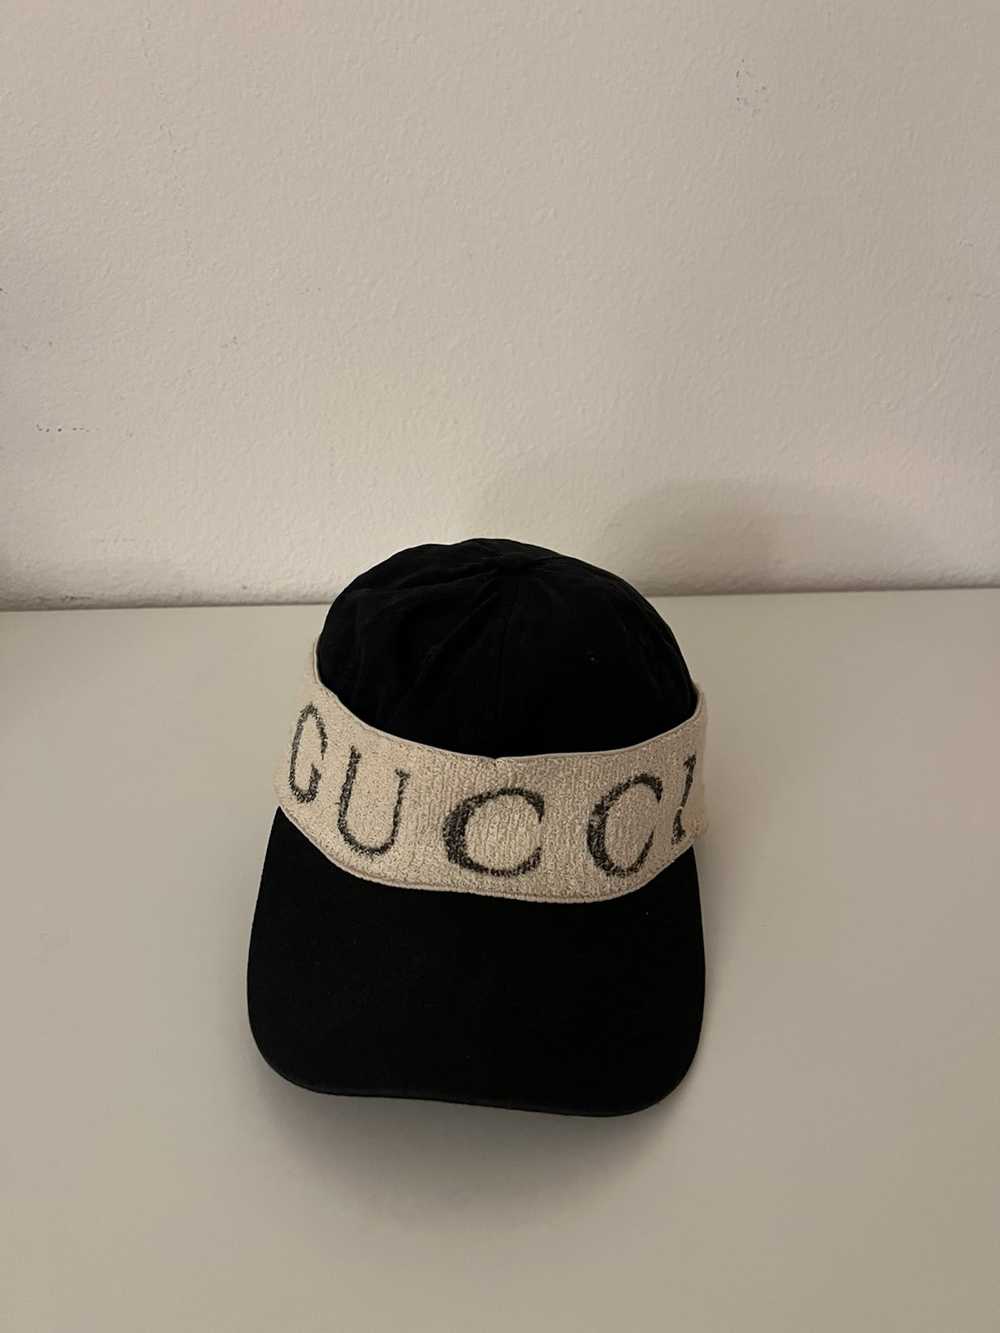 Gucci Gucci band hat - image 2